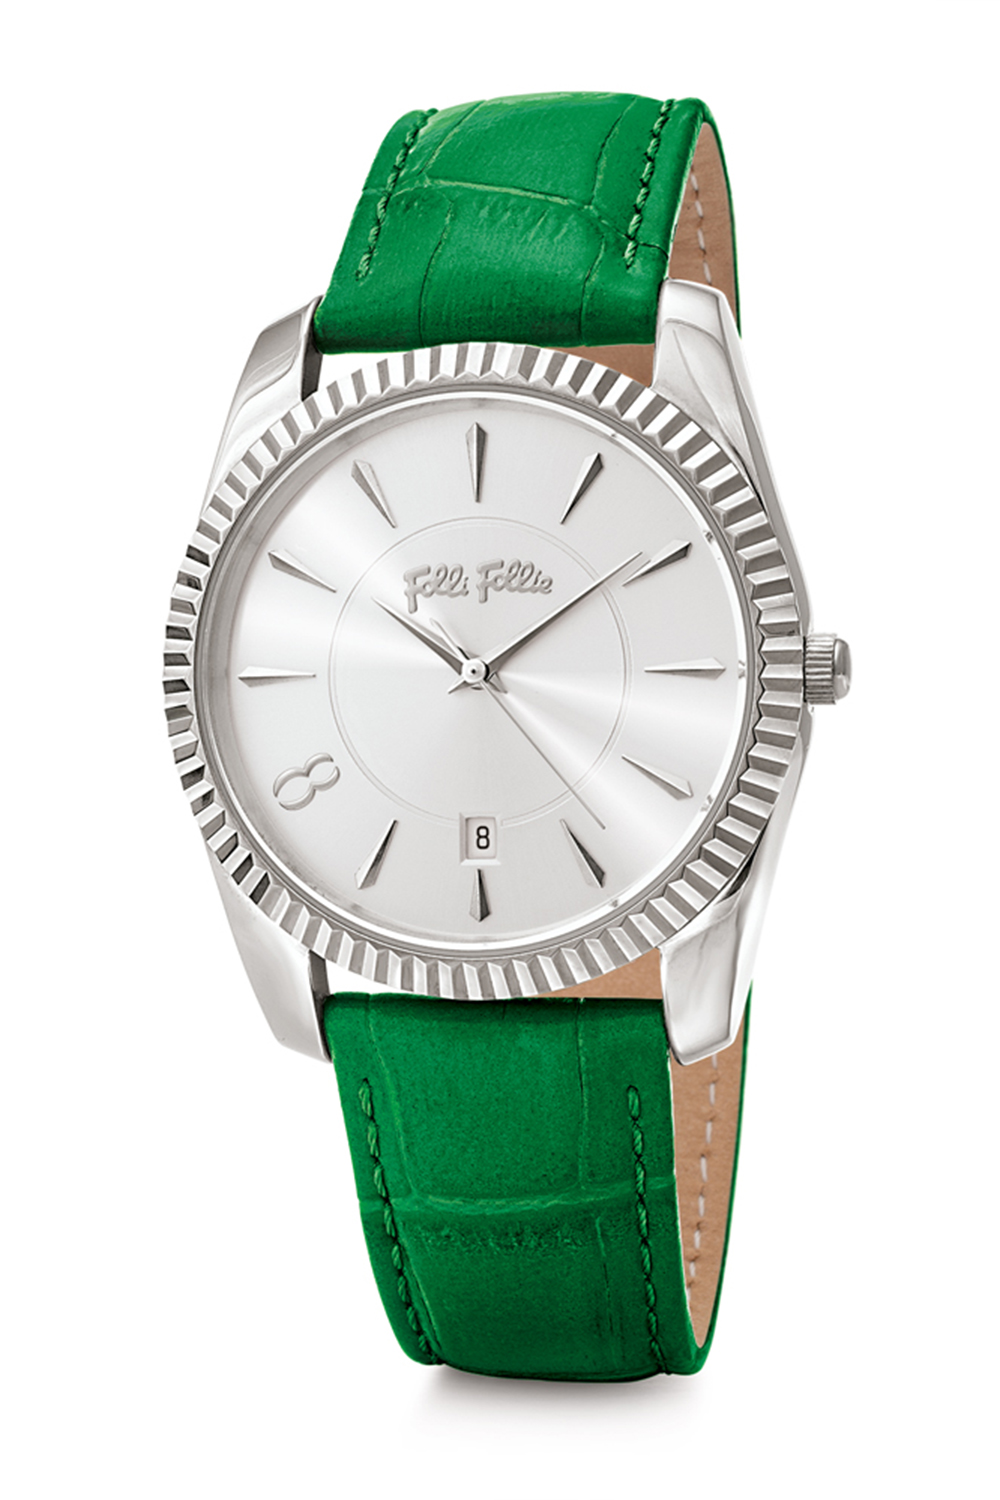 FOLLI FOLLIE – Γυναικείο ρολόι με δερμάτινο λουράκι FOLLI FOLLIE CHRONOS TALES πράσινο WF18T043SDS-GR